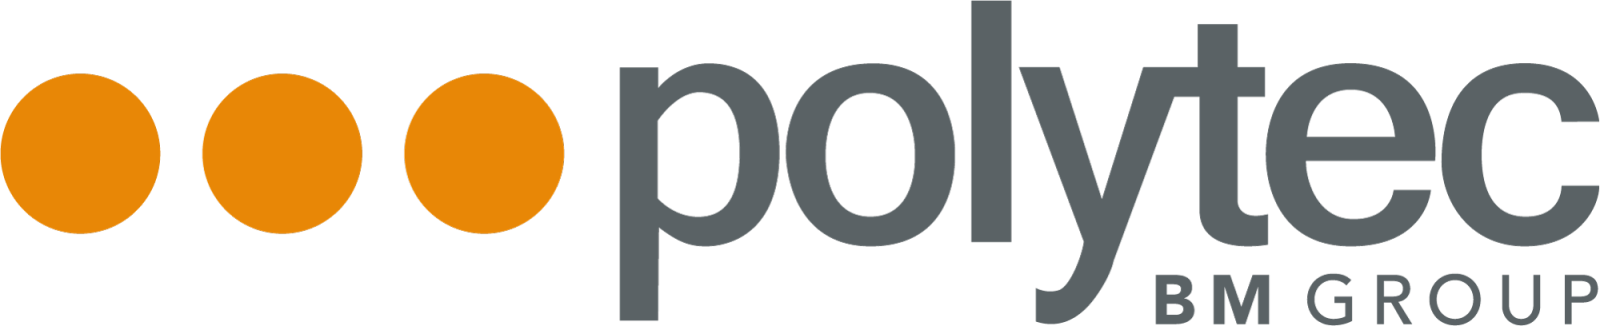 Logo BM Group Polytec SpA